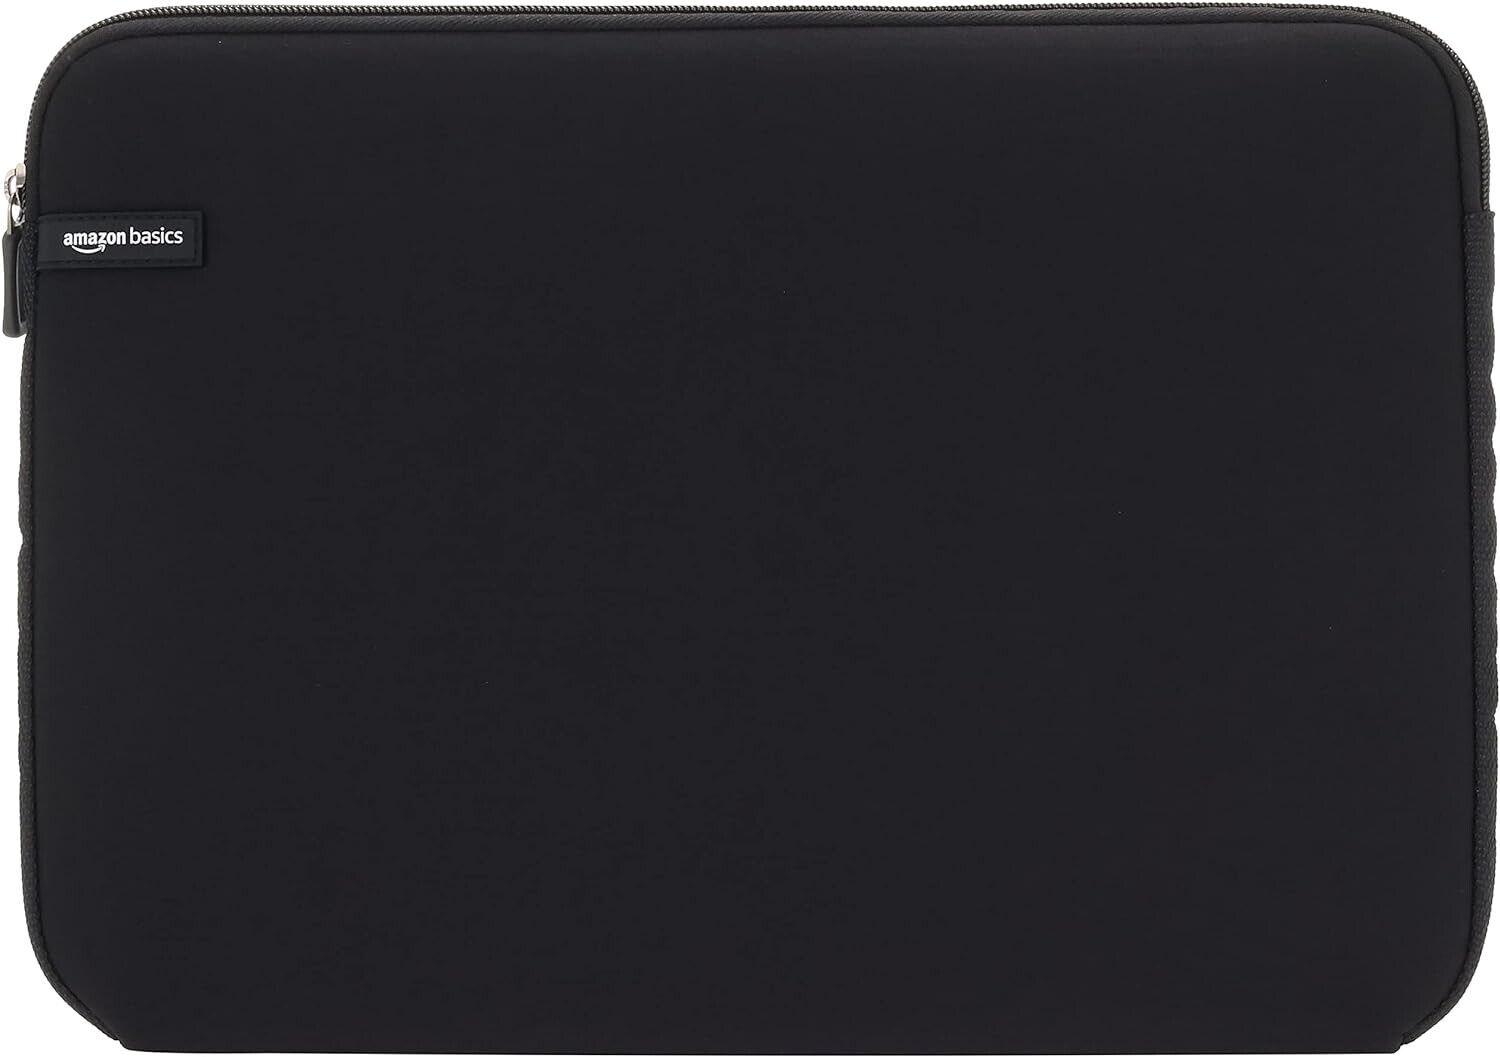 Amazon Basics 15.6 Inch Laptop Sleeve Padded Protective Case with Zipper - Black